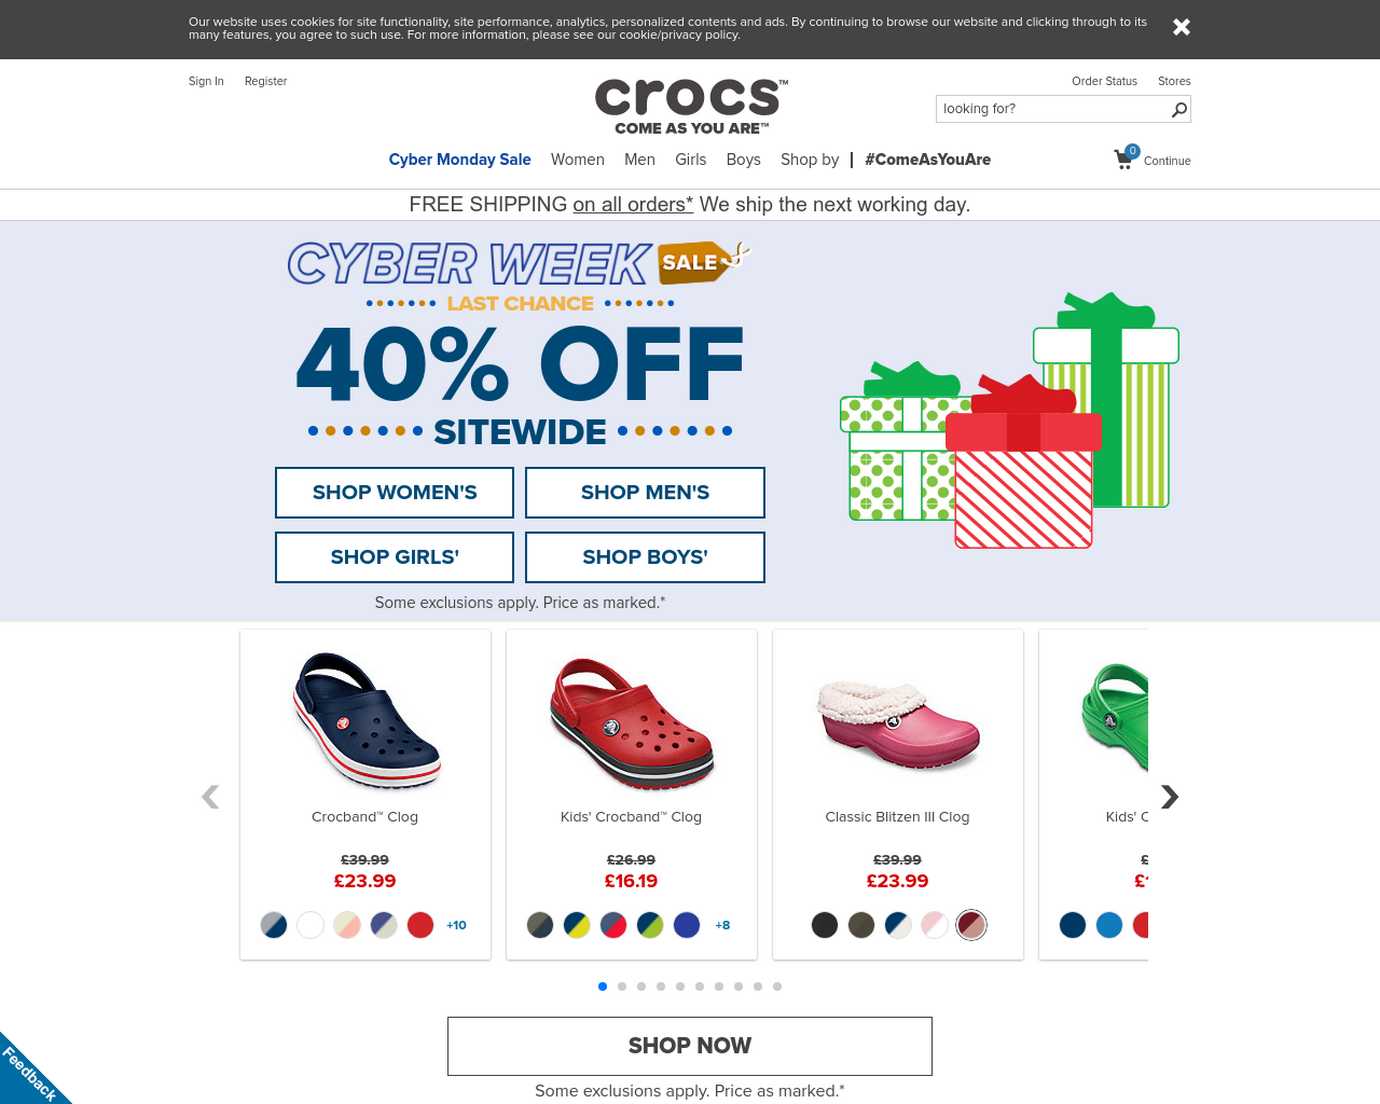 crocs promo code march 2019